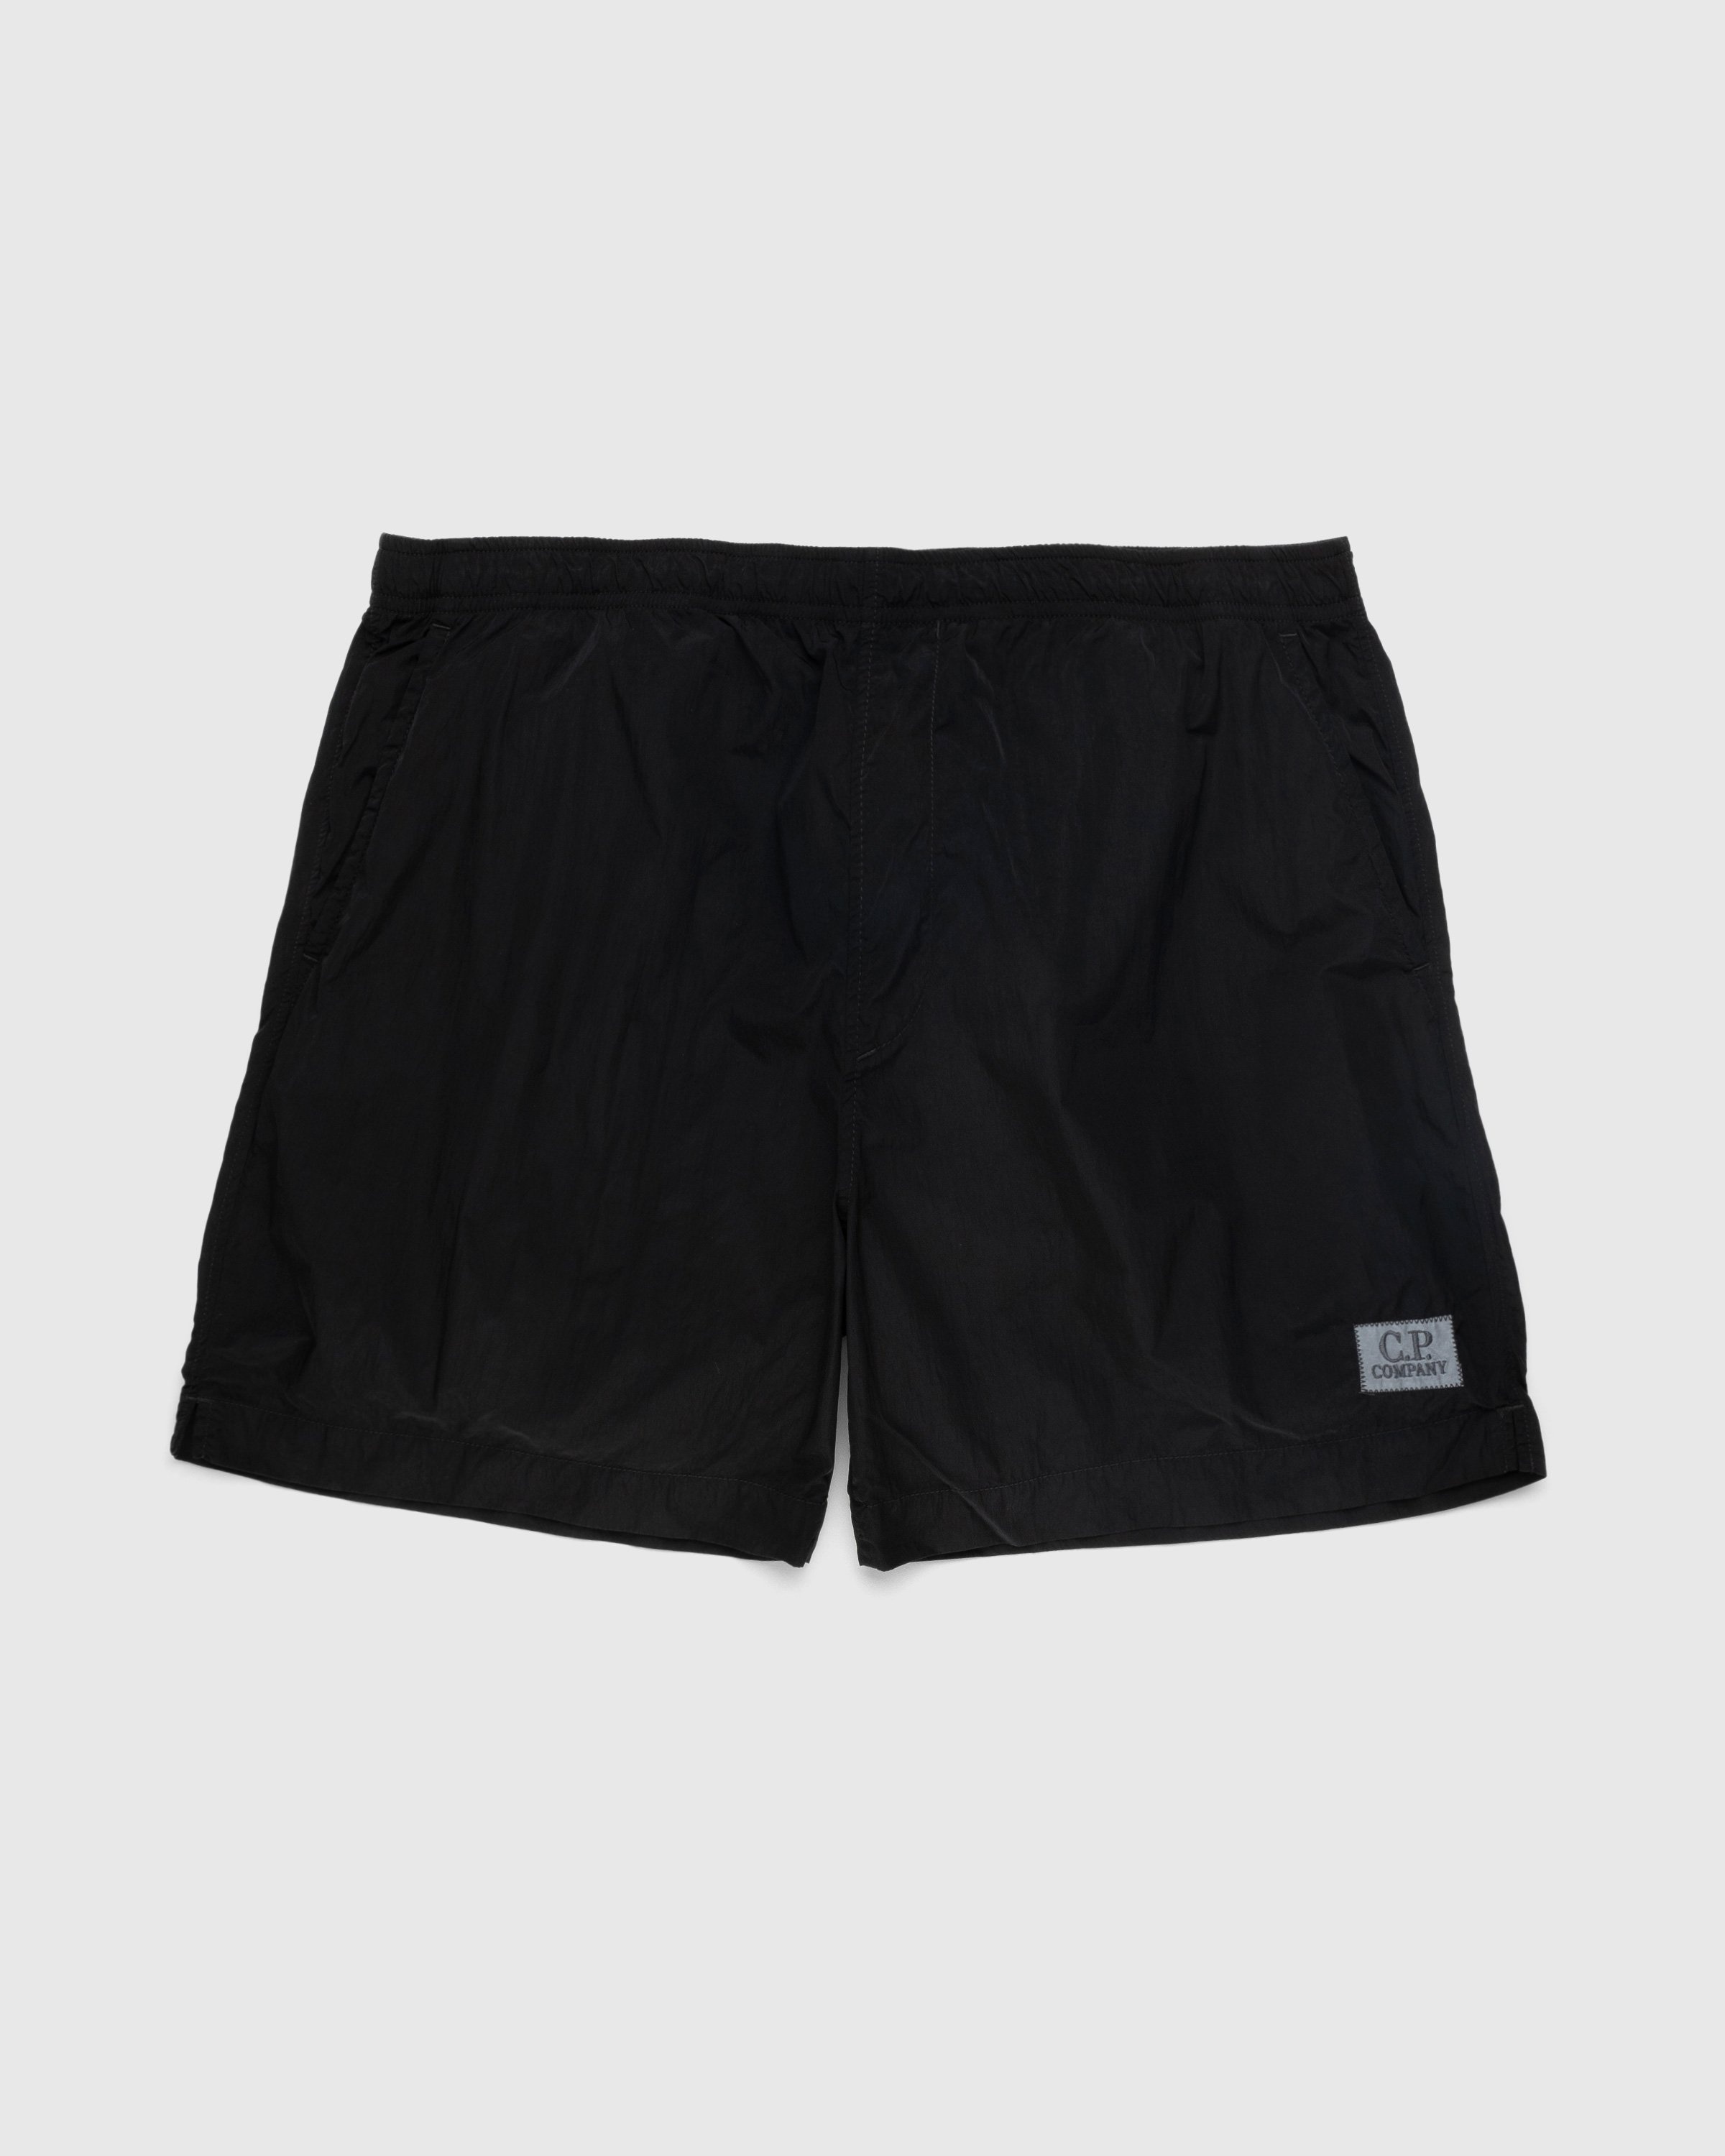 C.P. Company – Eco-Chrome Swim Shorts Black - Swim Shorts - Black - Image 1